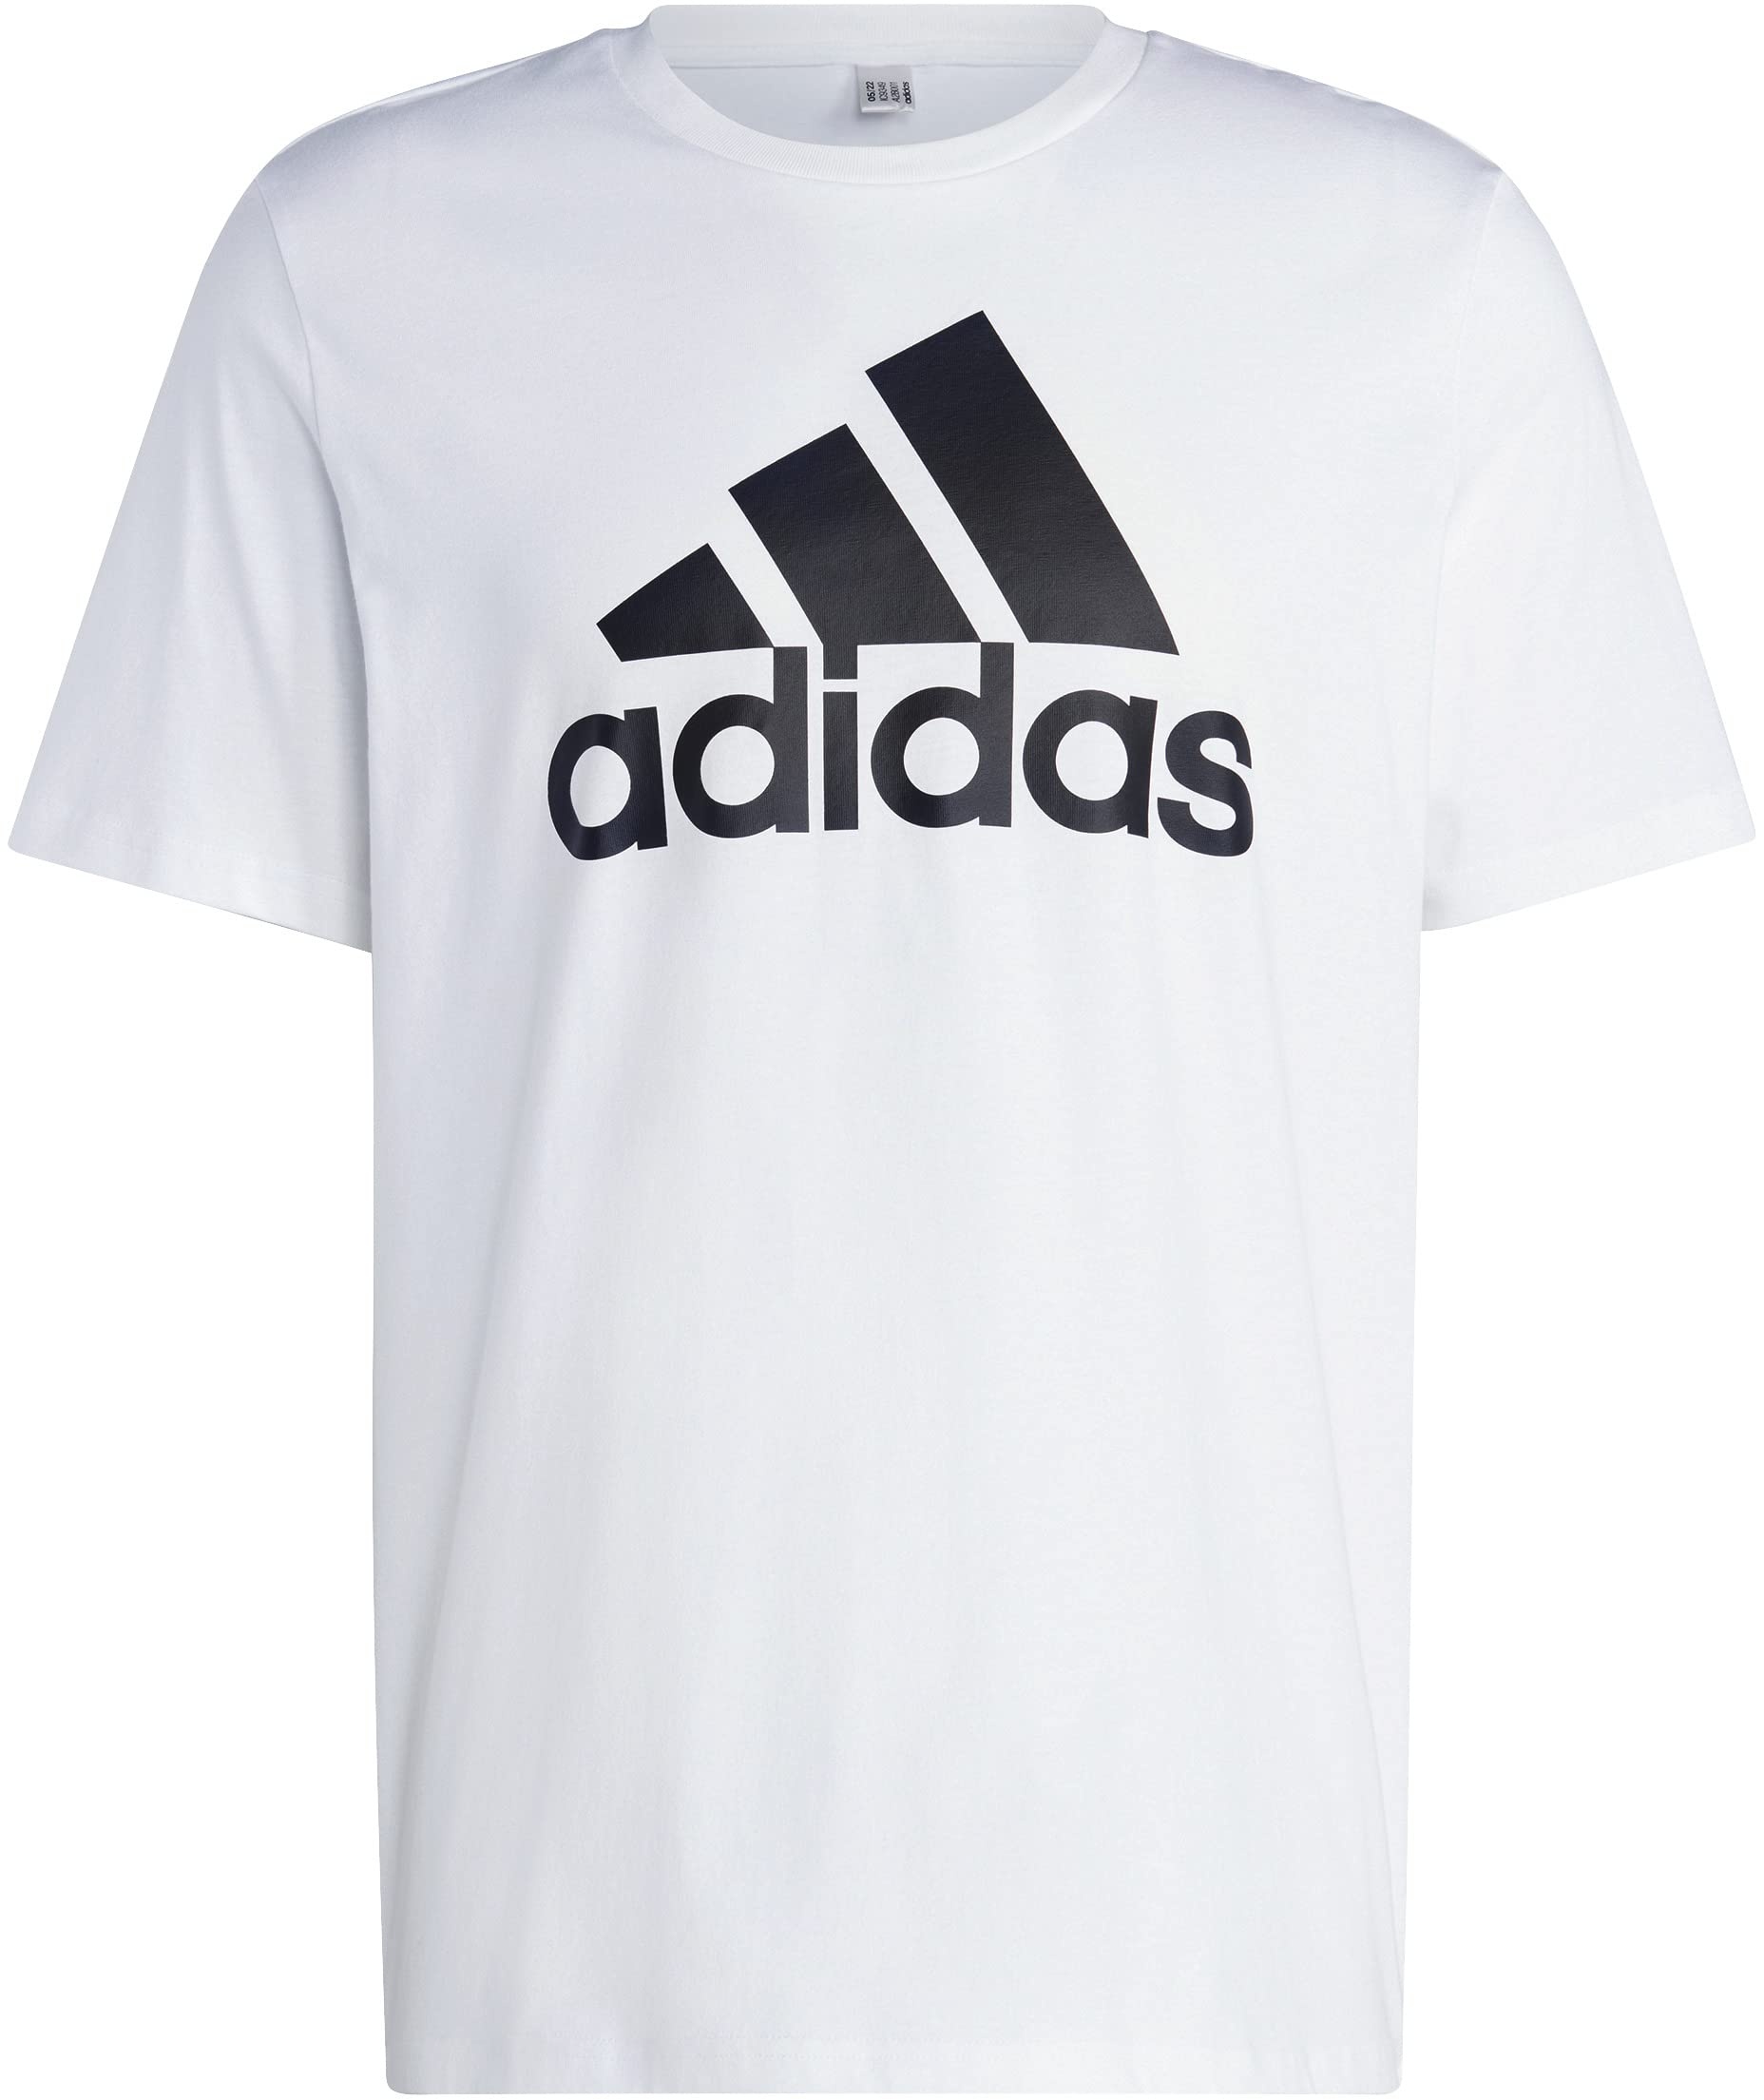 adidas Herren Essentials Single Langarm T-Shirt, White, L